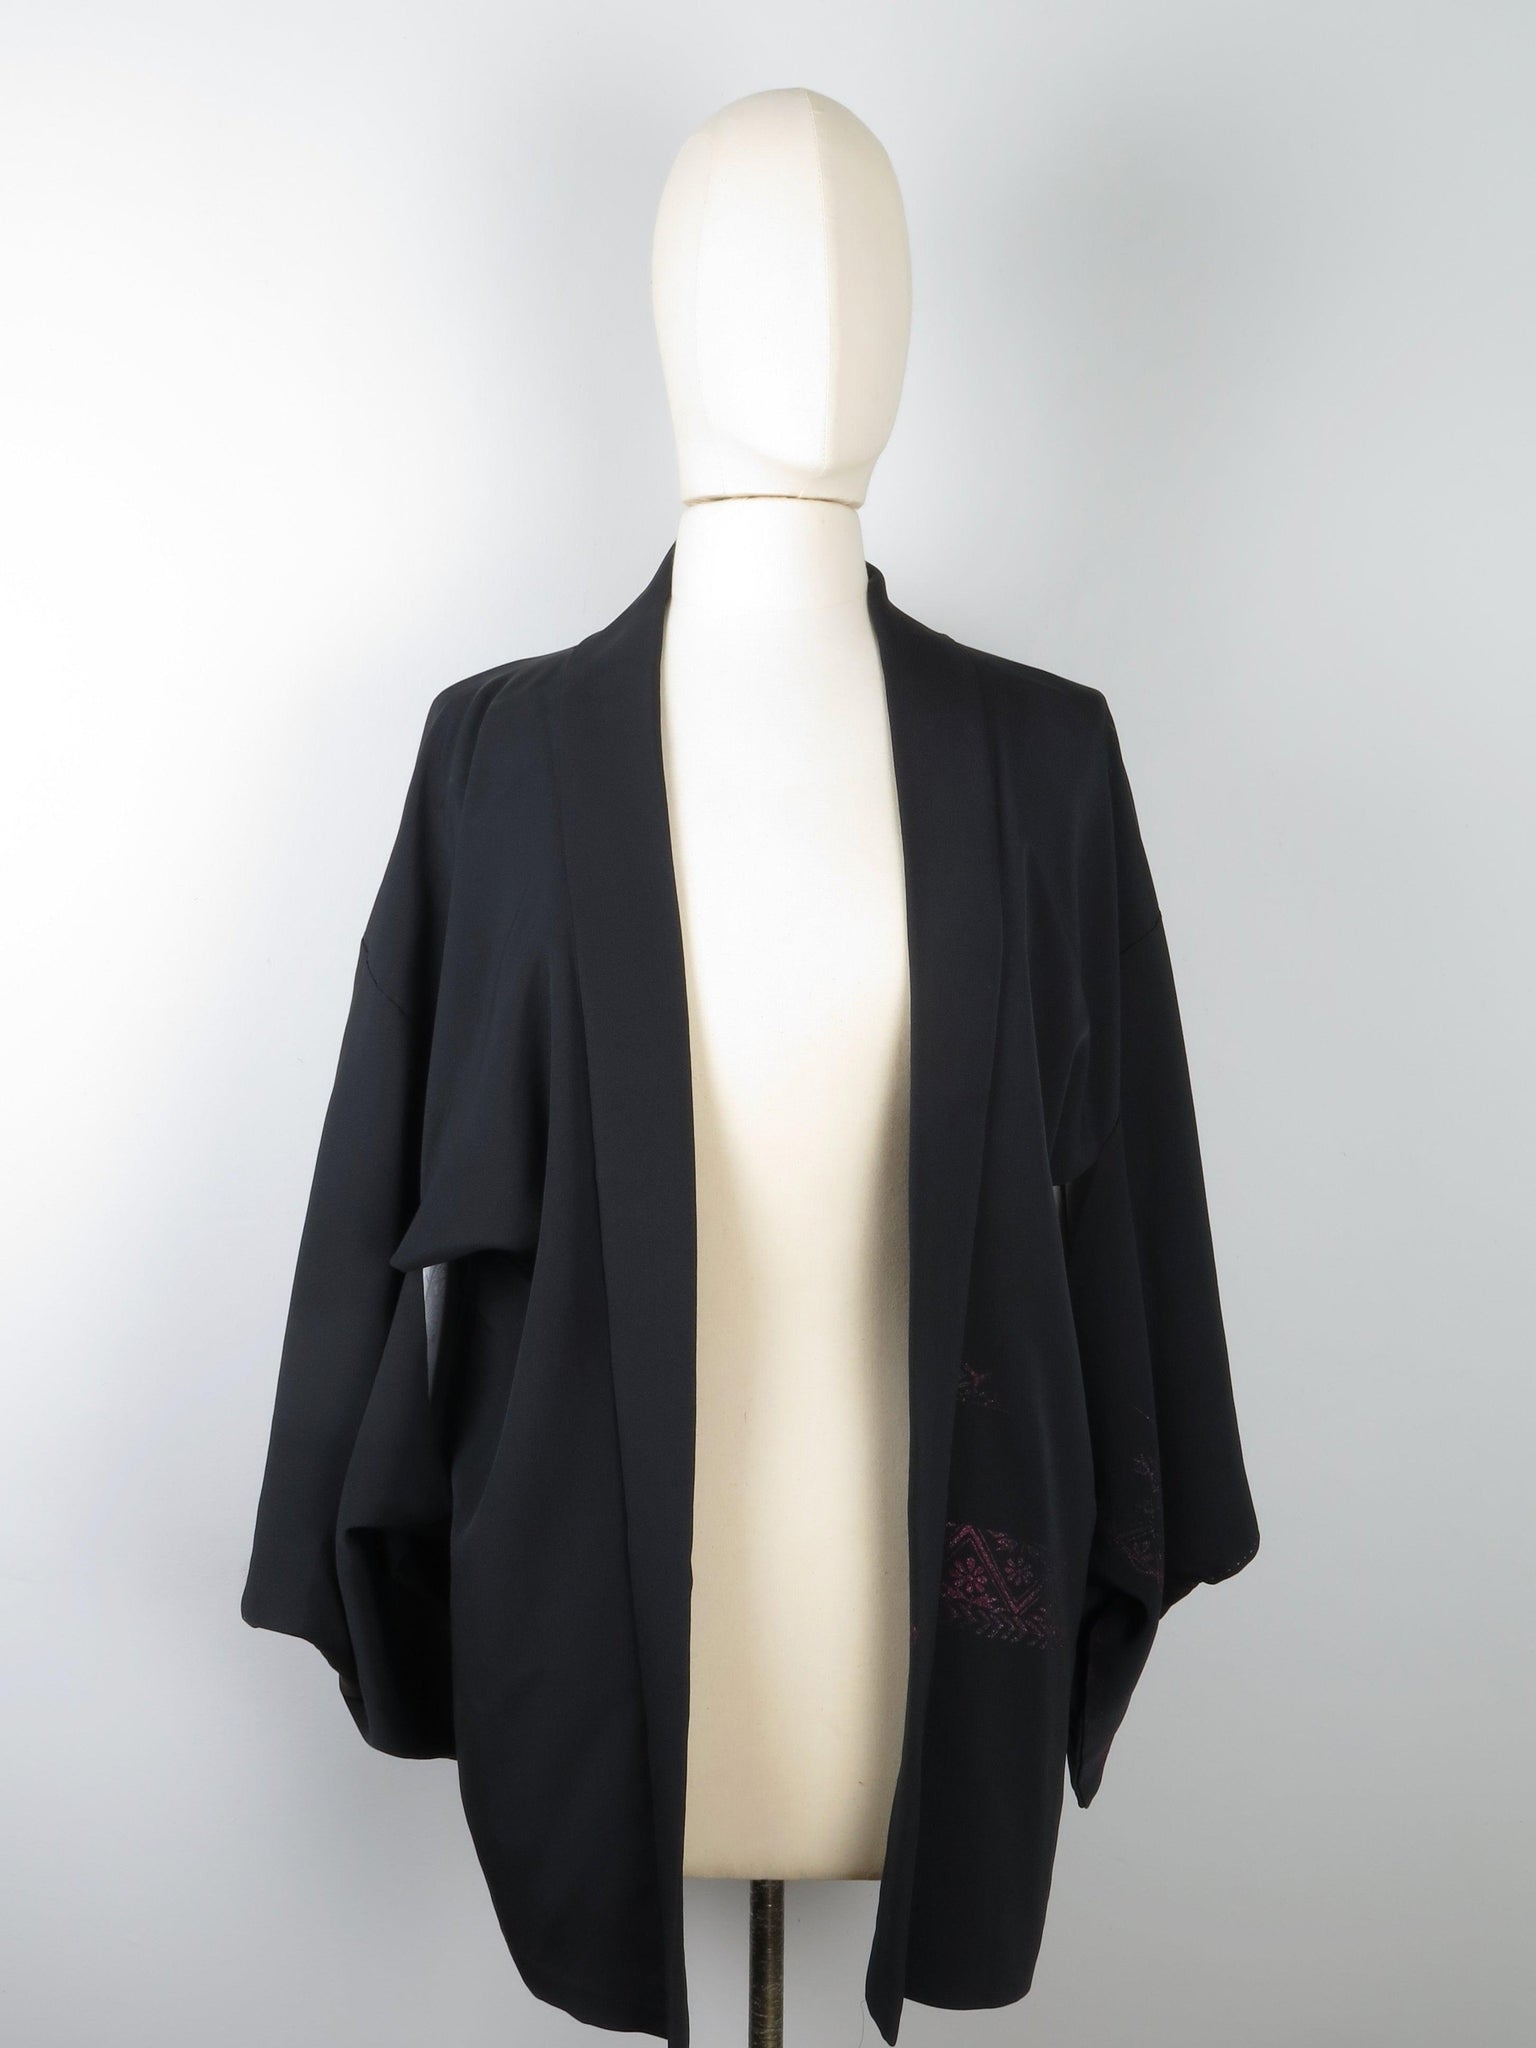 Black Vintage Kimono With Pink Embroidery M